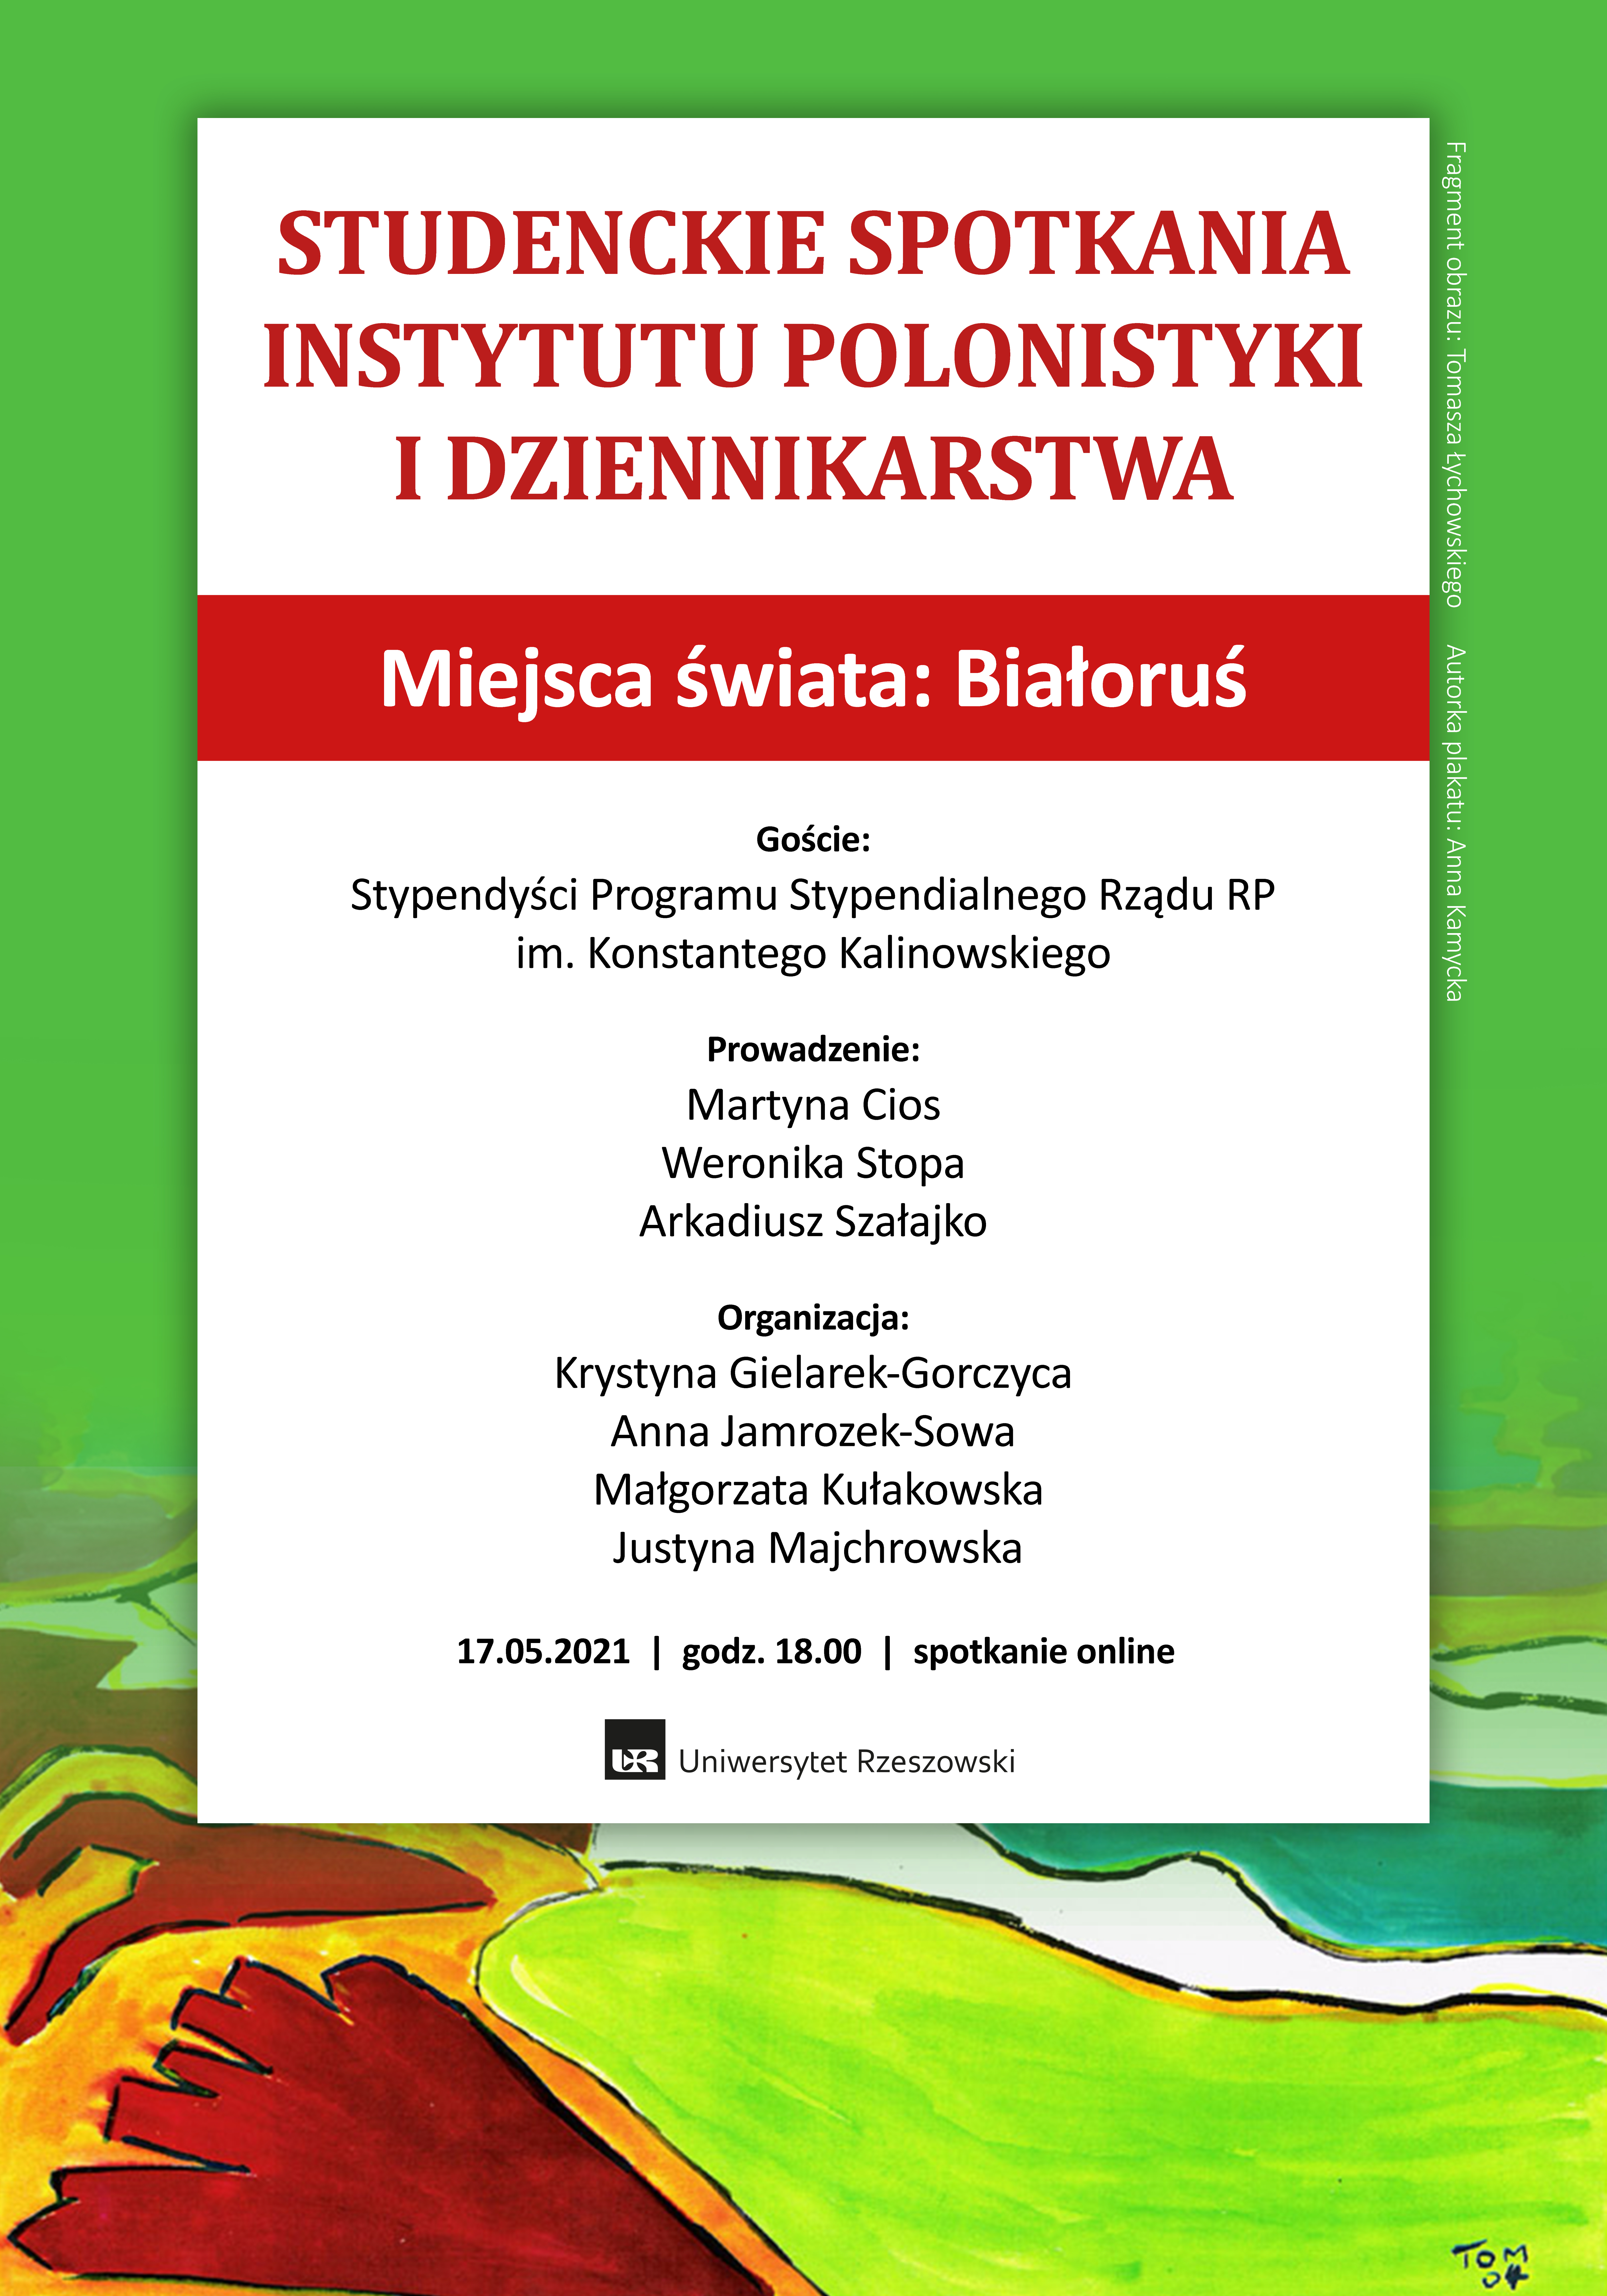 Plakat - spotkanie 17.05.21 Białoruś.jpg [8.36 MB]